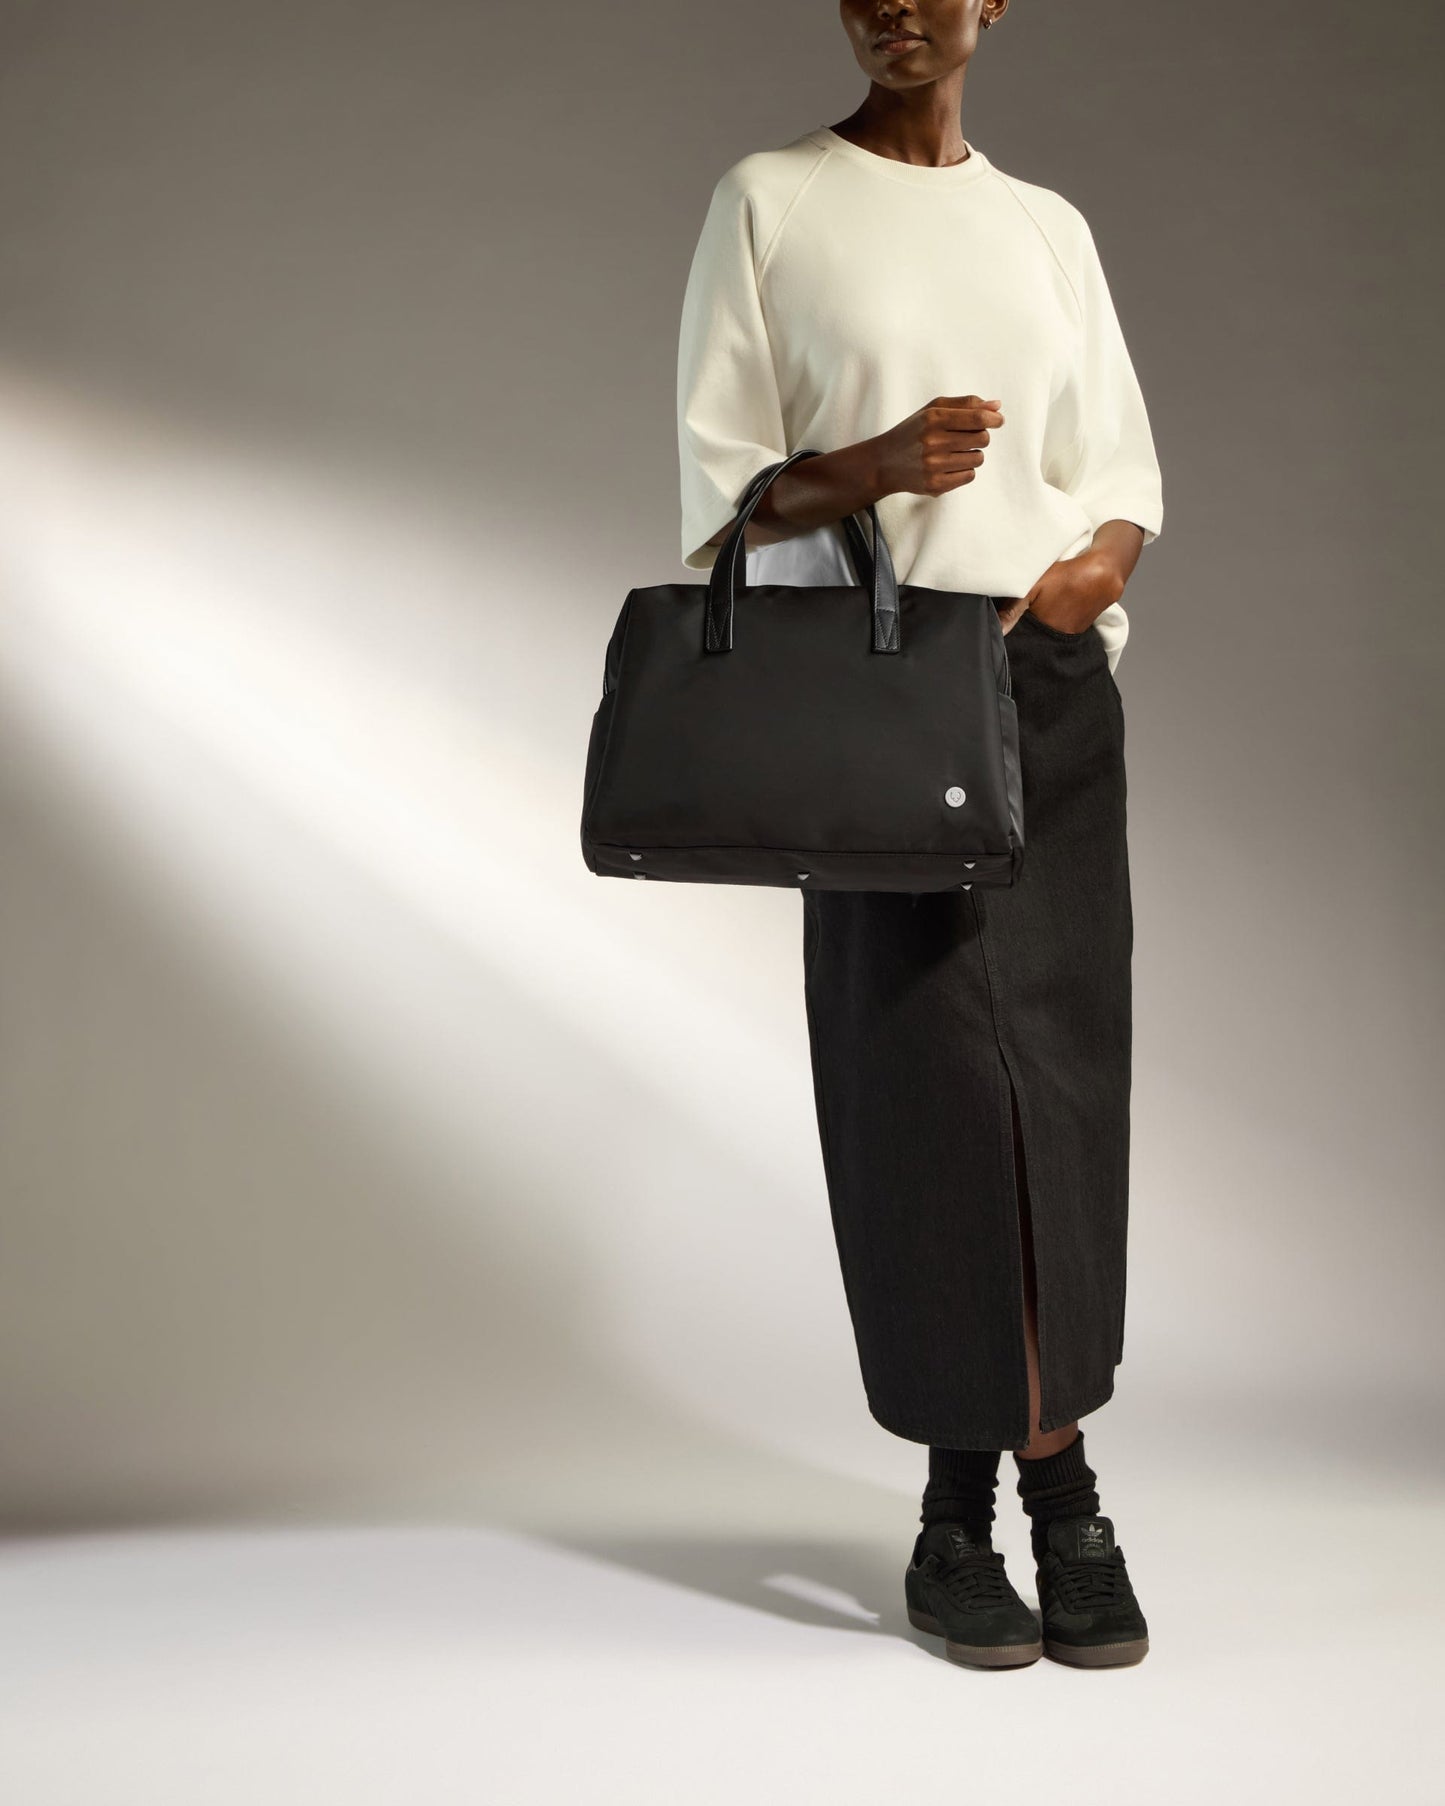 Antler Luggage -  Chelsea overnight bag in black - Overnight Bags Chelsea Overnight Bag Black | Lifestyle Bags | Antler UK